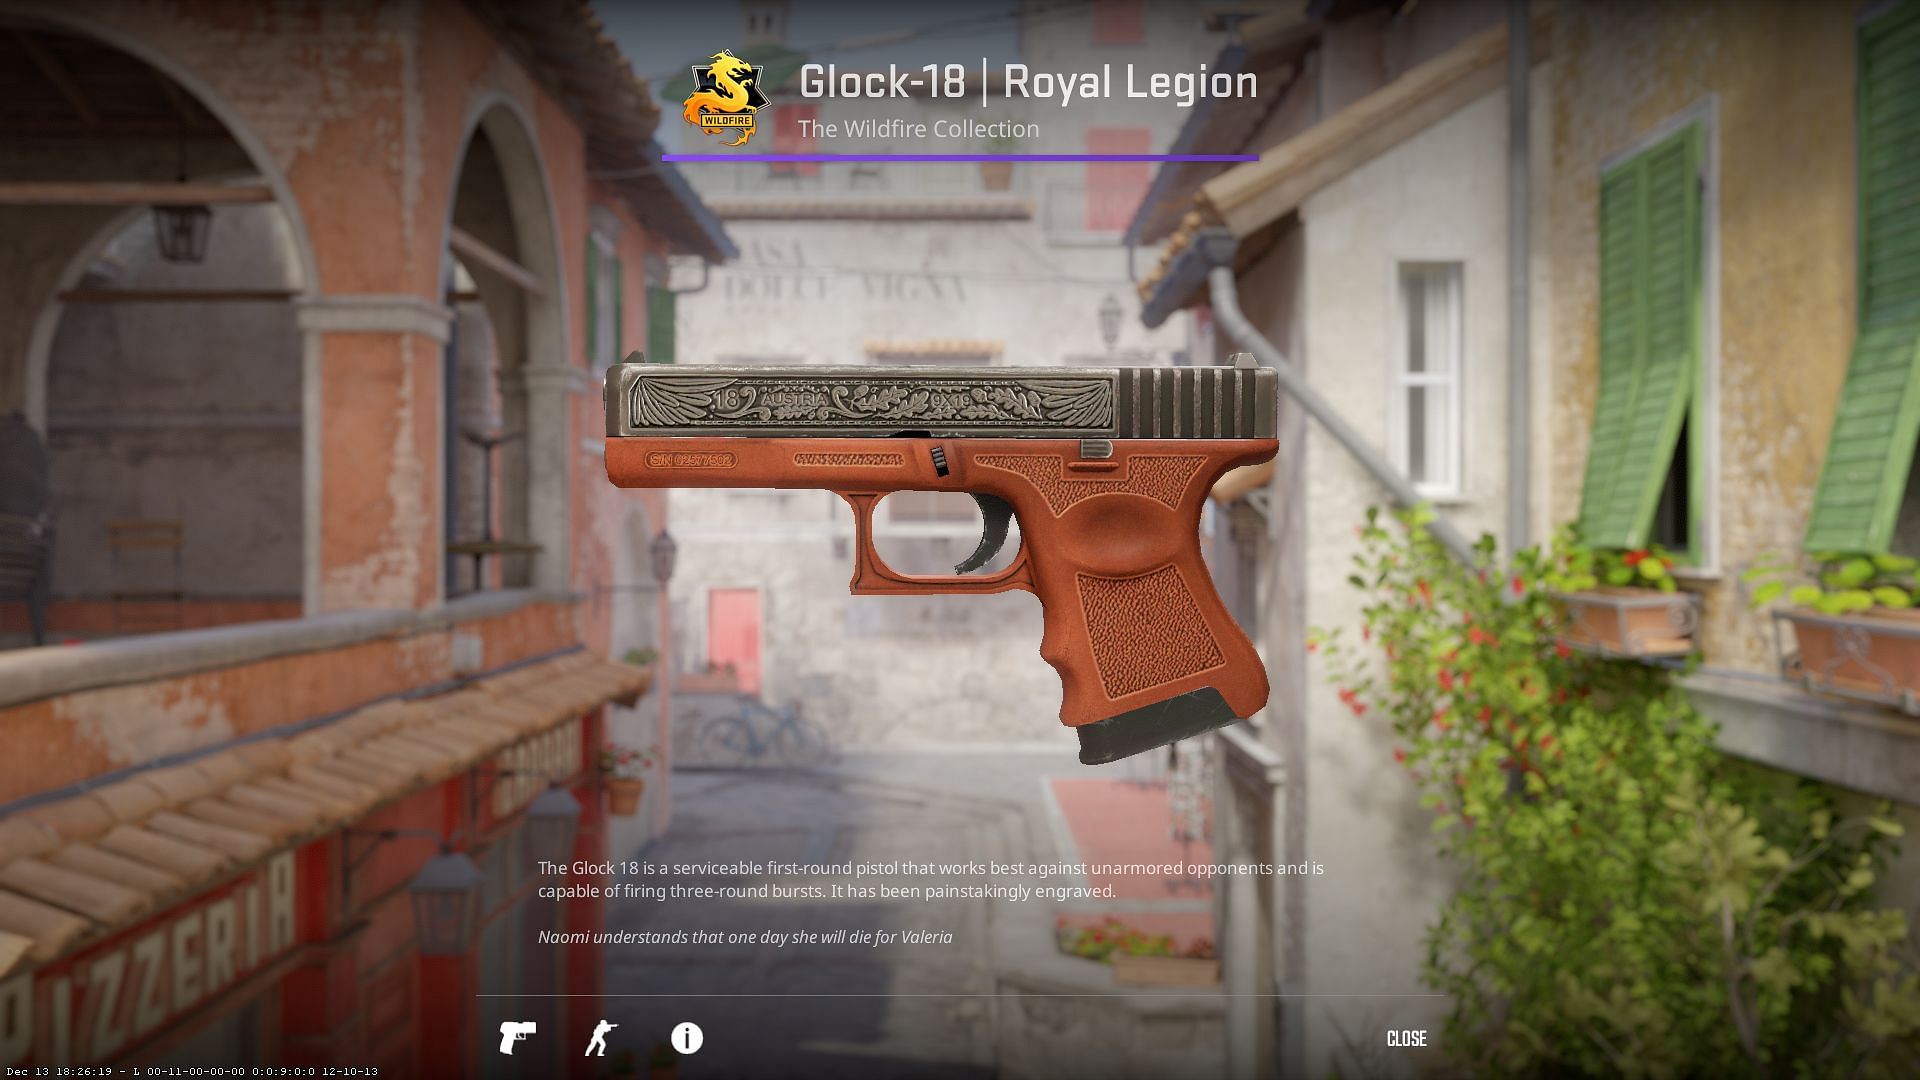 Glock-18 Royal Legion (Image via Valve)